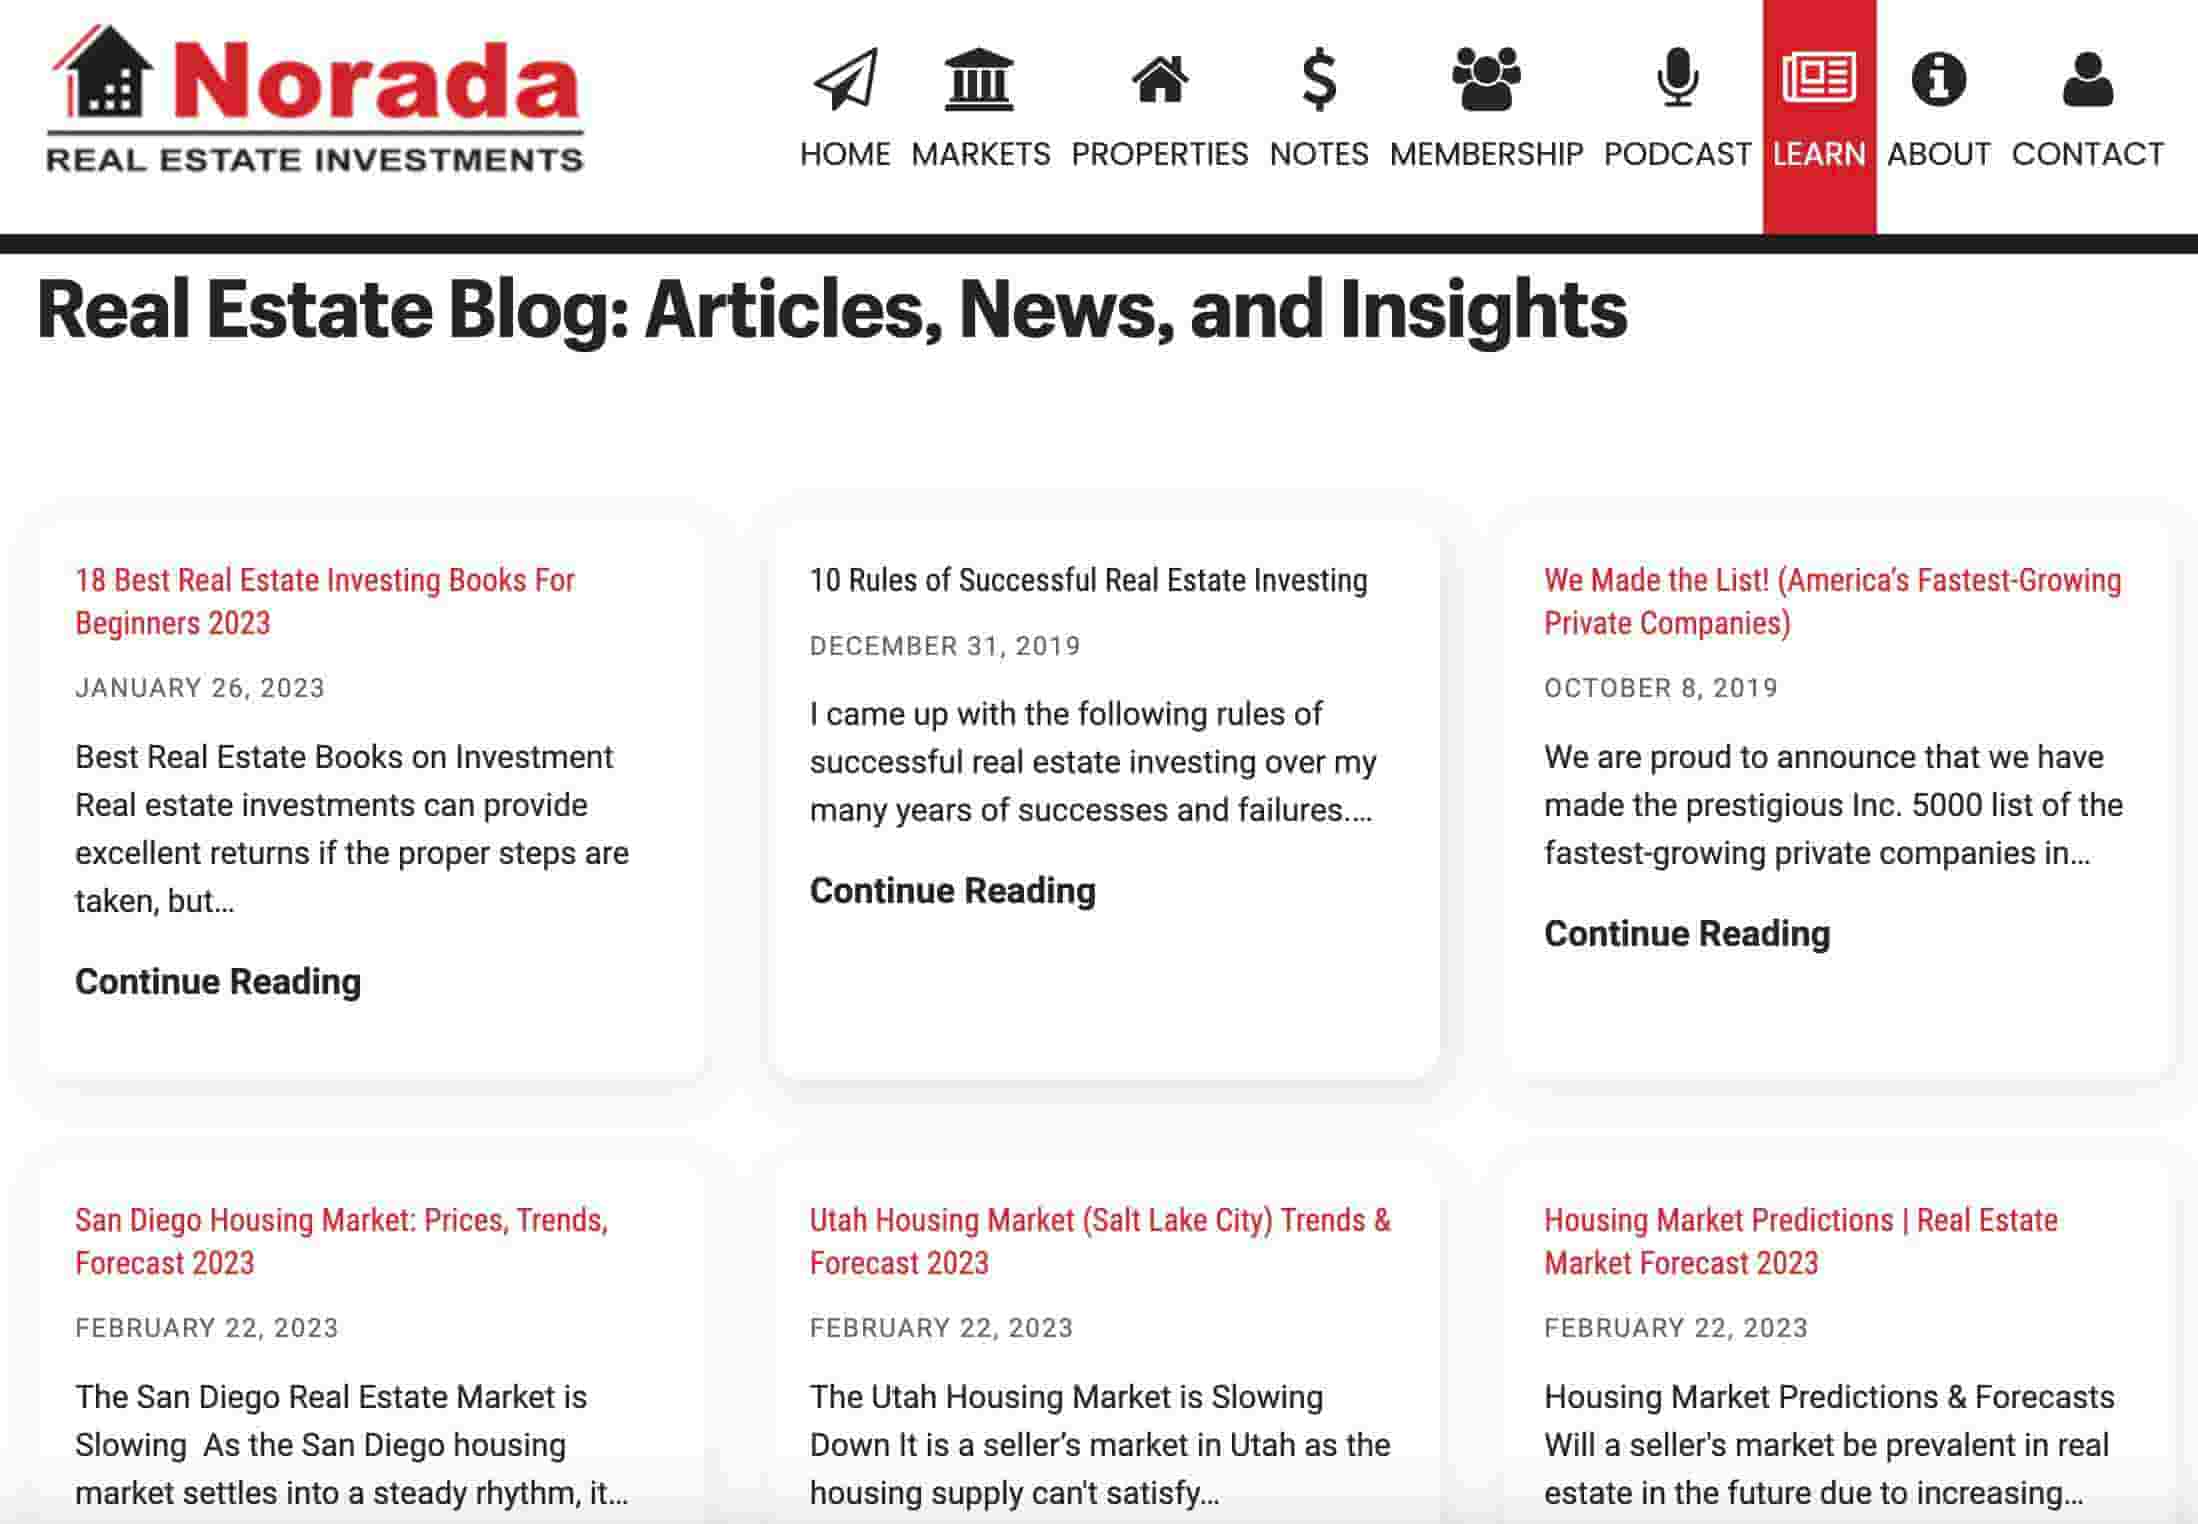 Norada real estate blog